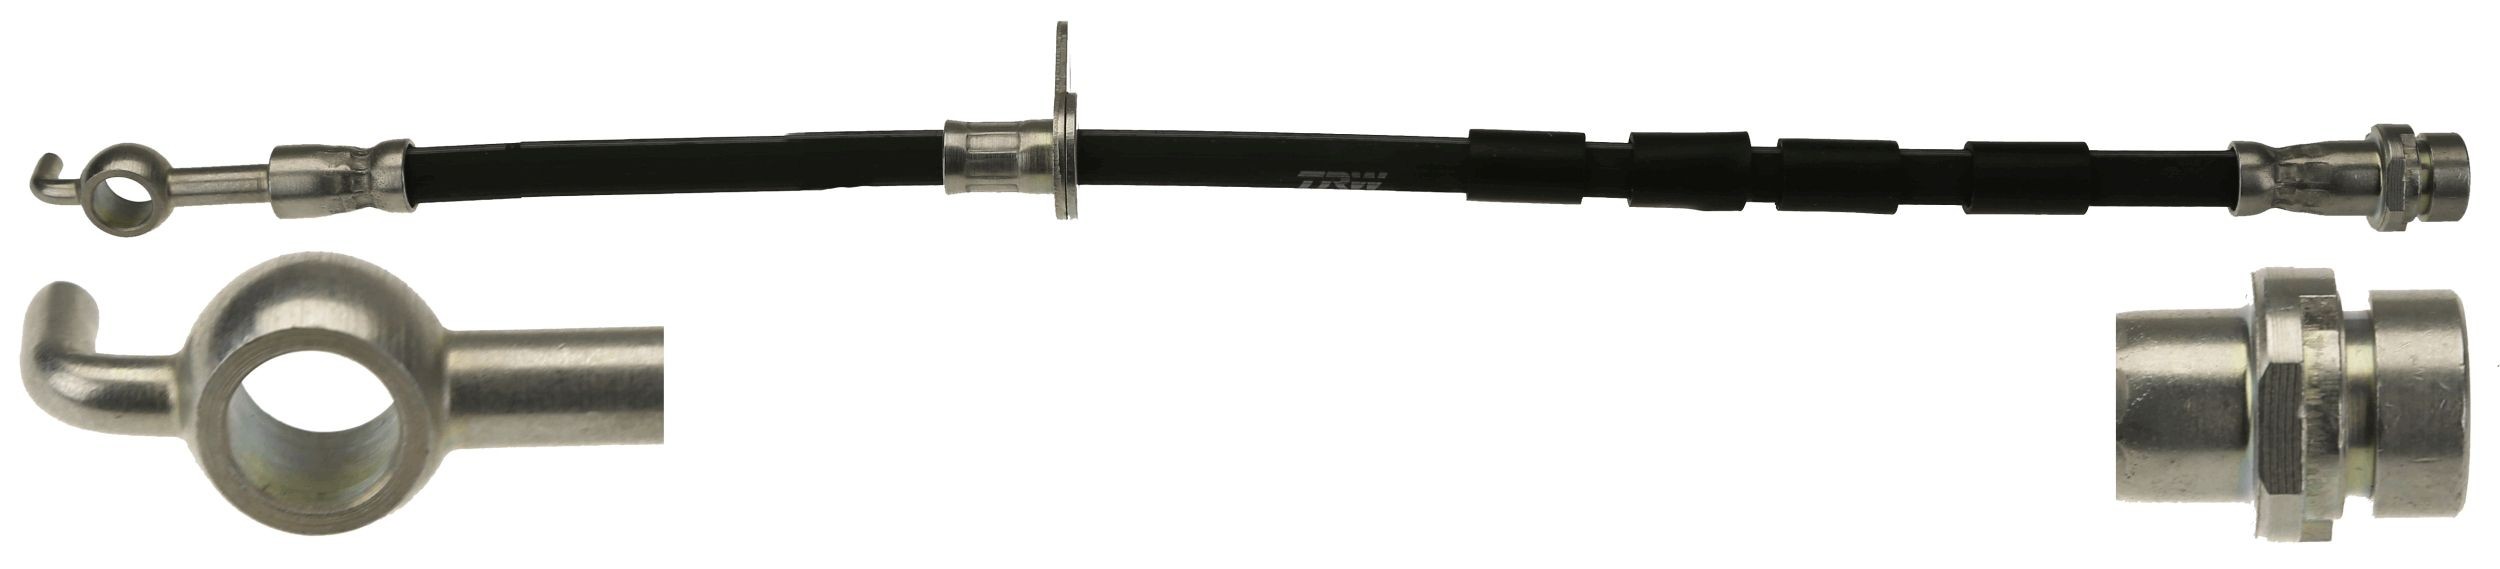 TRW 405 mm, M10x1, Internal Thread Length: 405mm, Thread Size 1: M10x1, Thread Size 2: Banjo Brake line PHD1144 buy